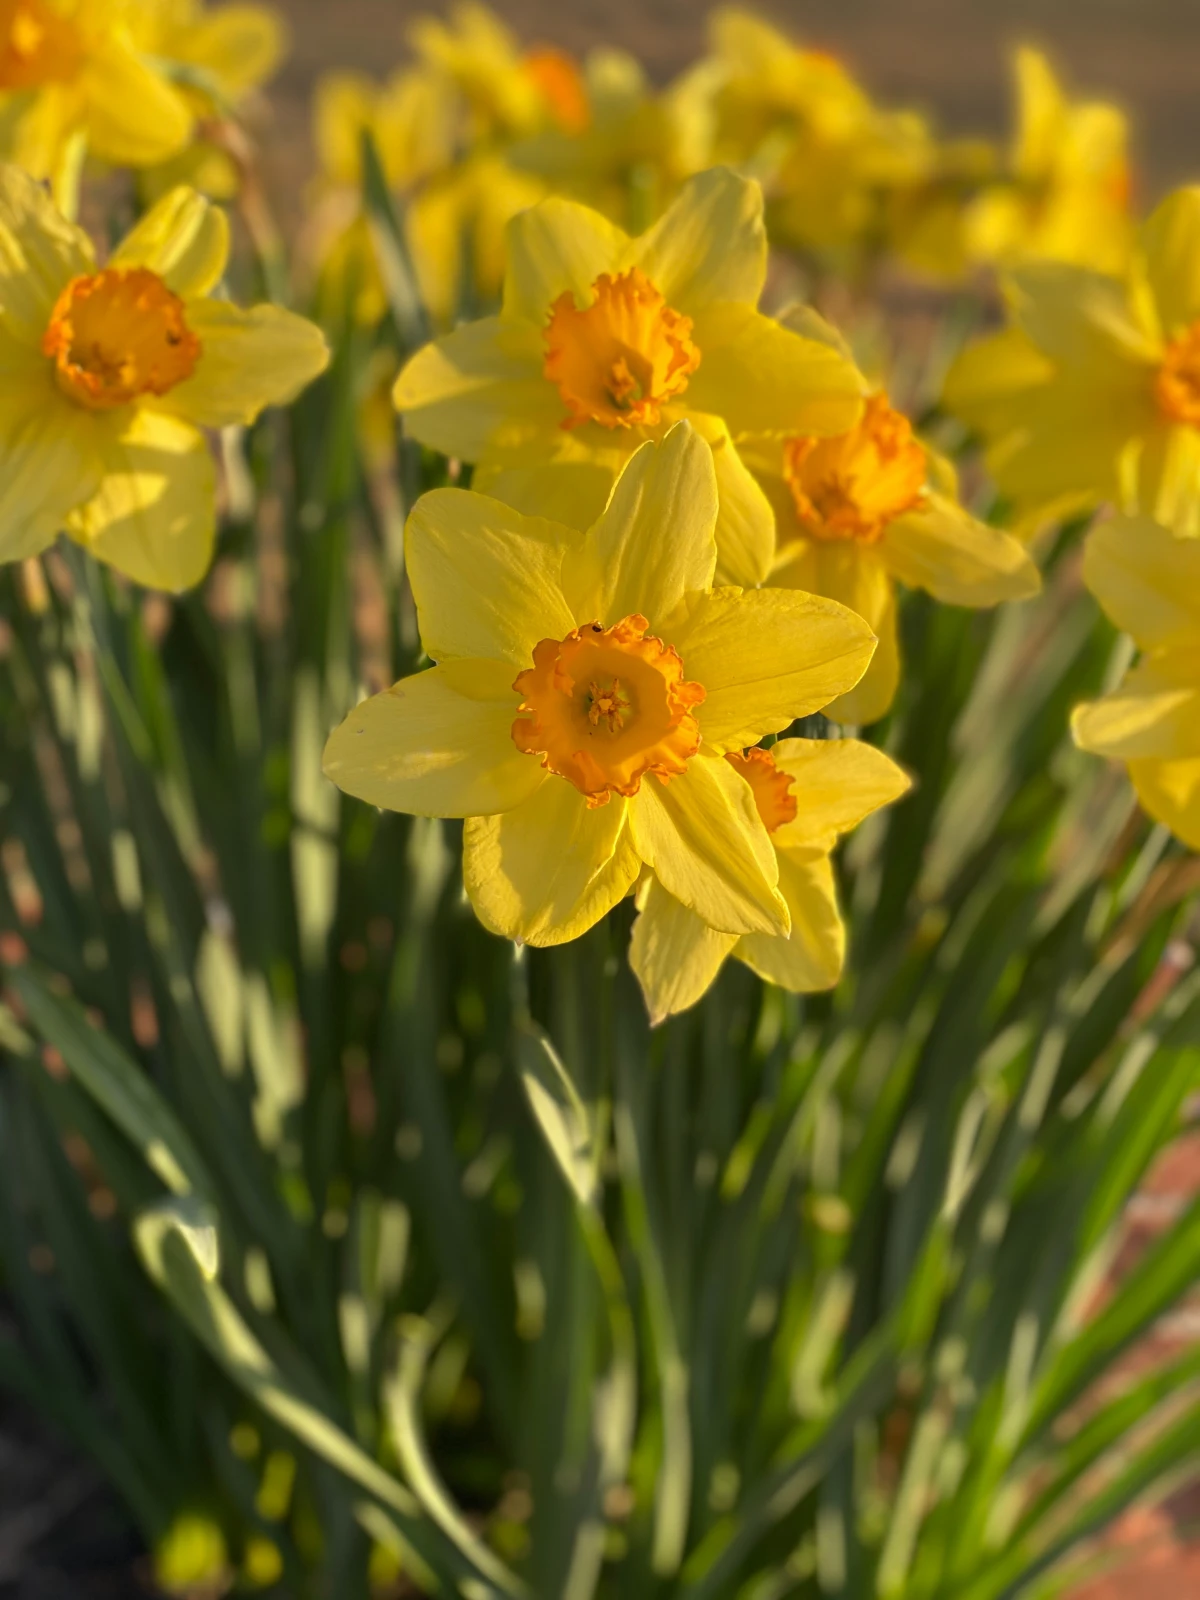 daffodil flowers in the garden